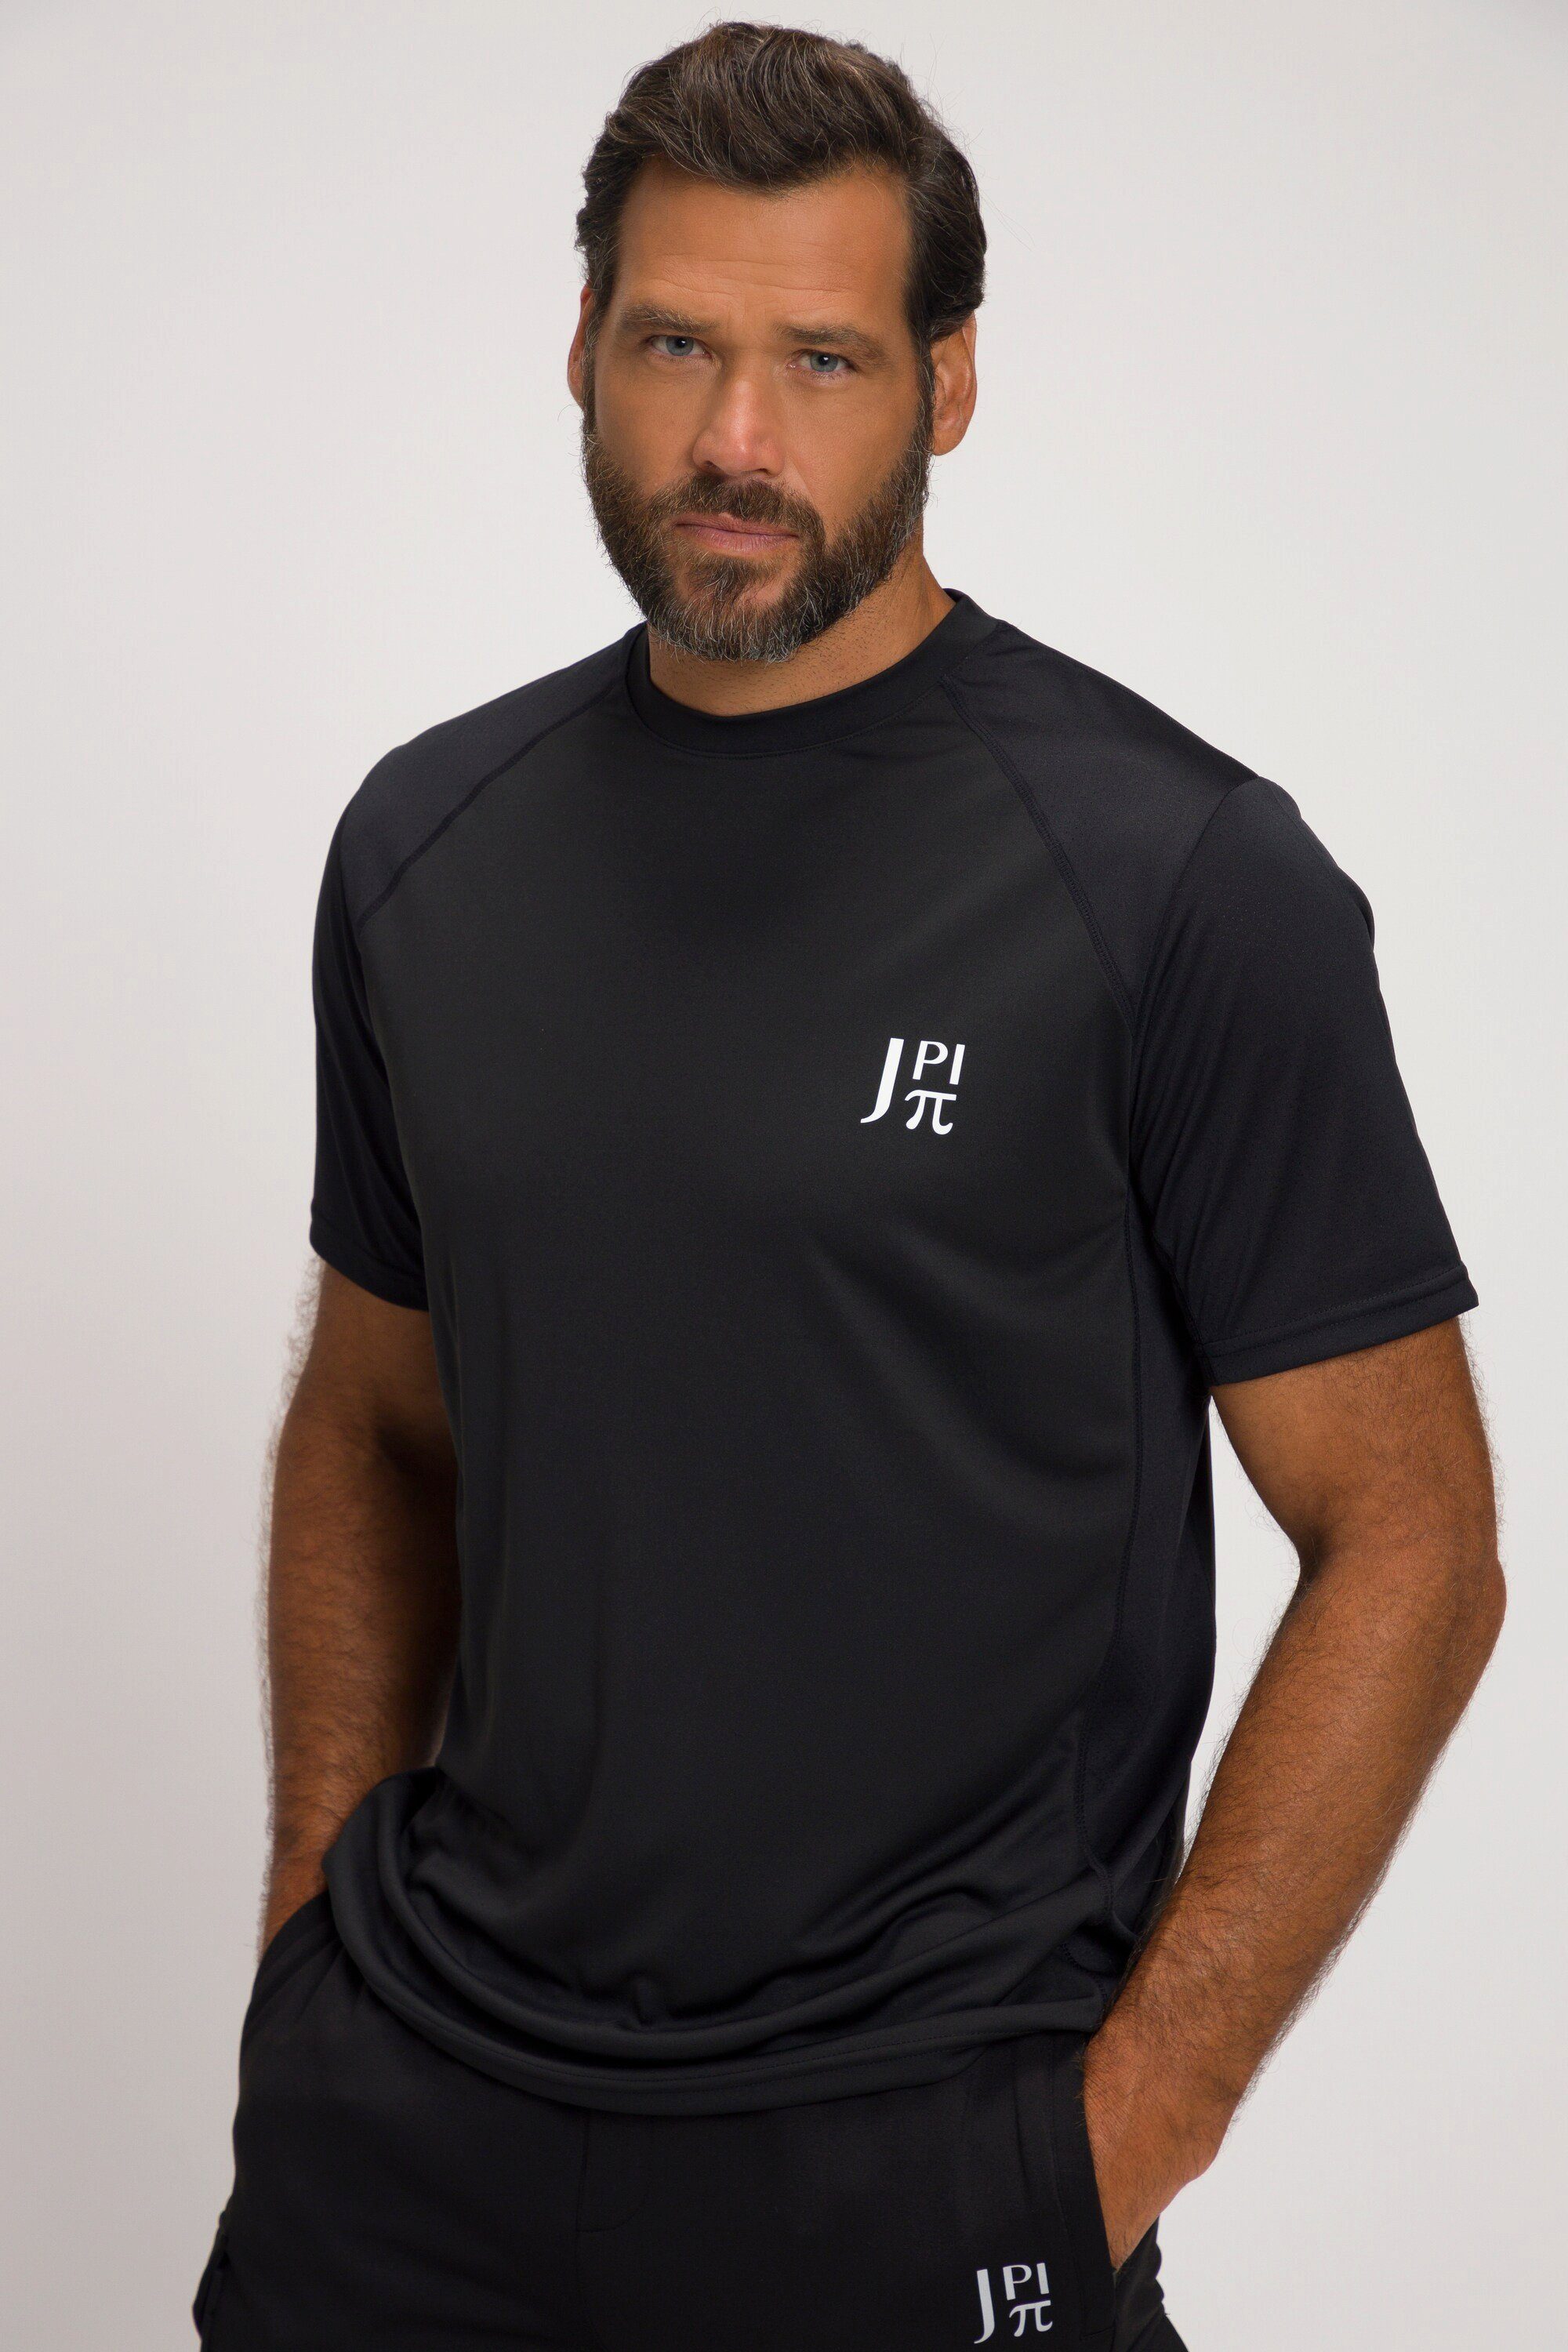 JP1880 T-Shirt Funktions-Shirt Tennis Halbarm atmungsaktiv schwarz